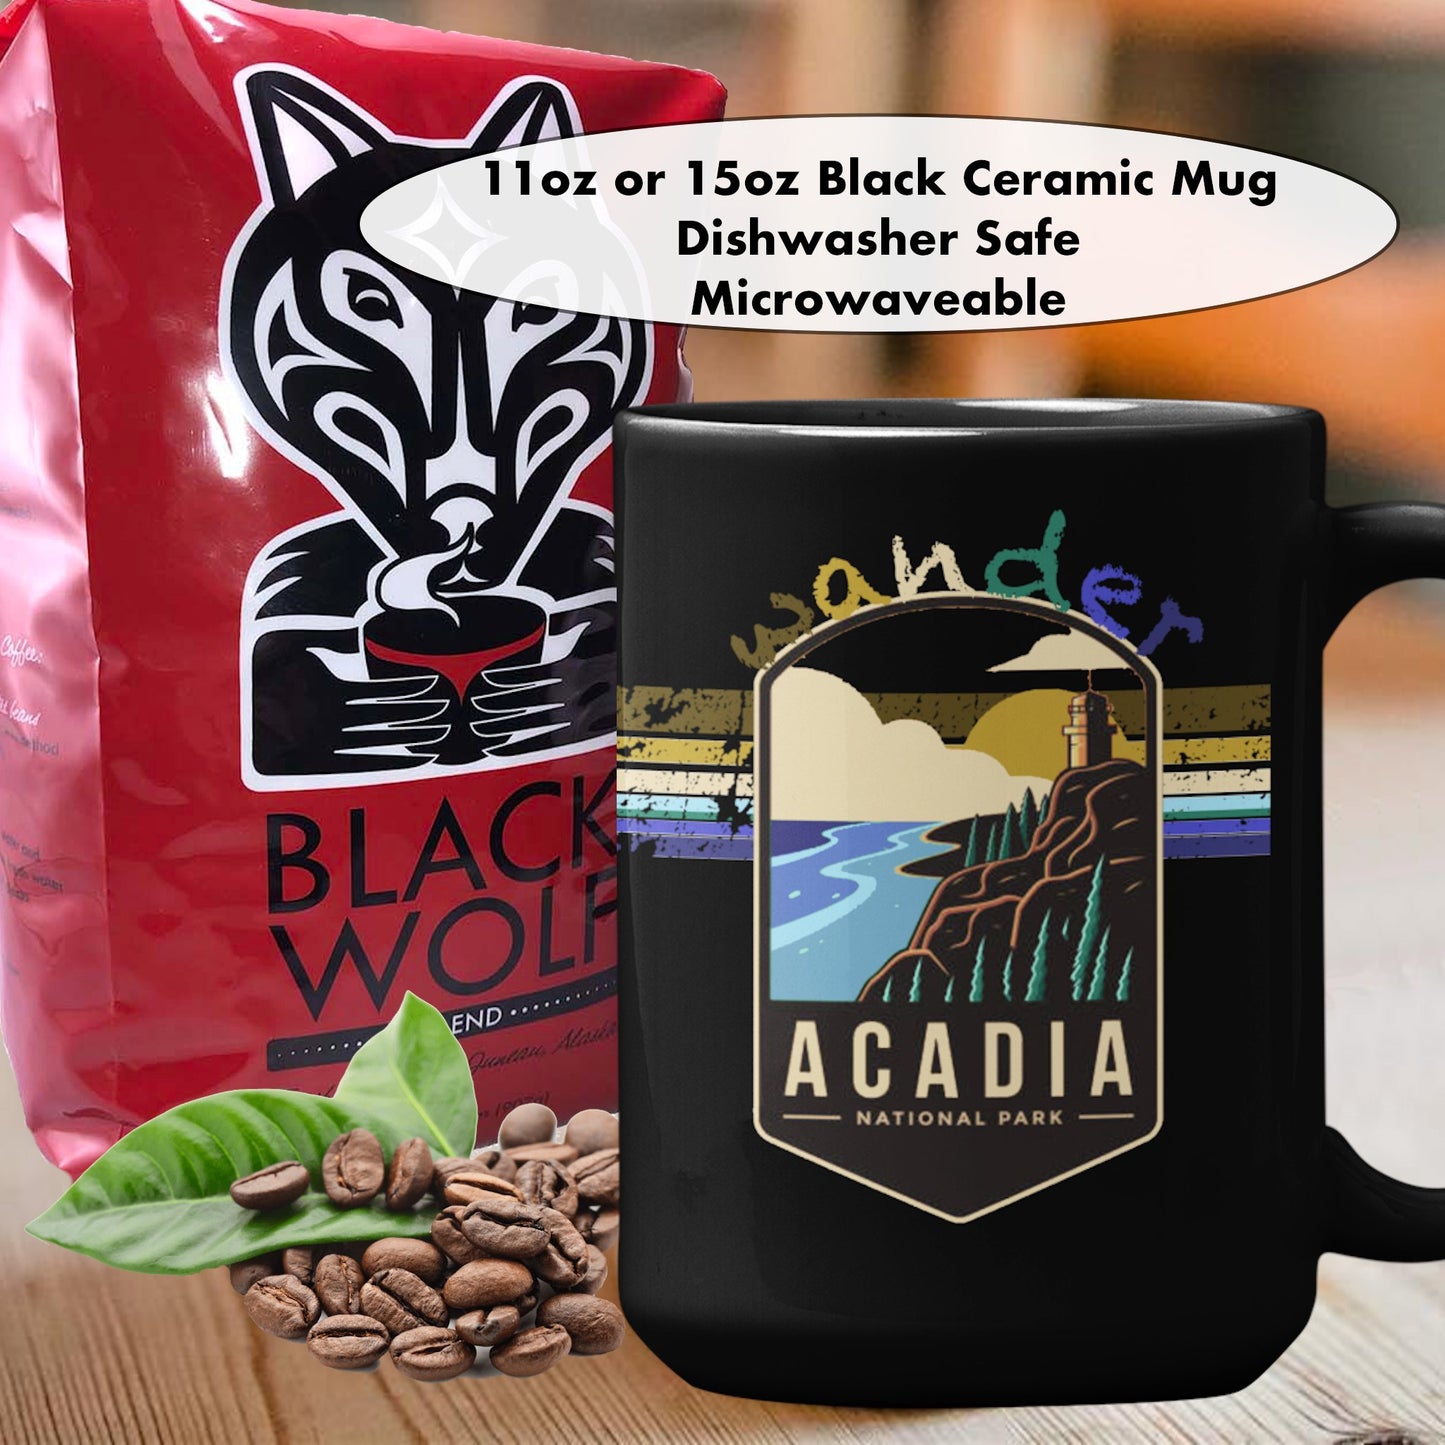 Acadia National Park Black Coffee Mug 15oz - Coral and Vine Co